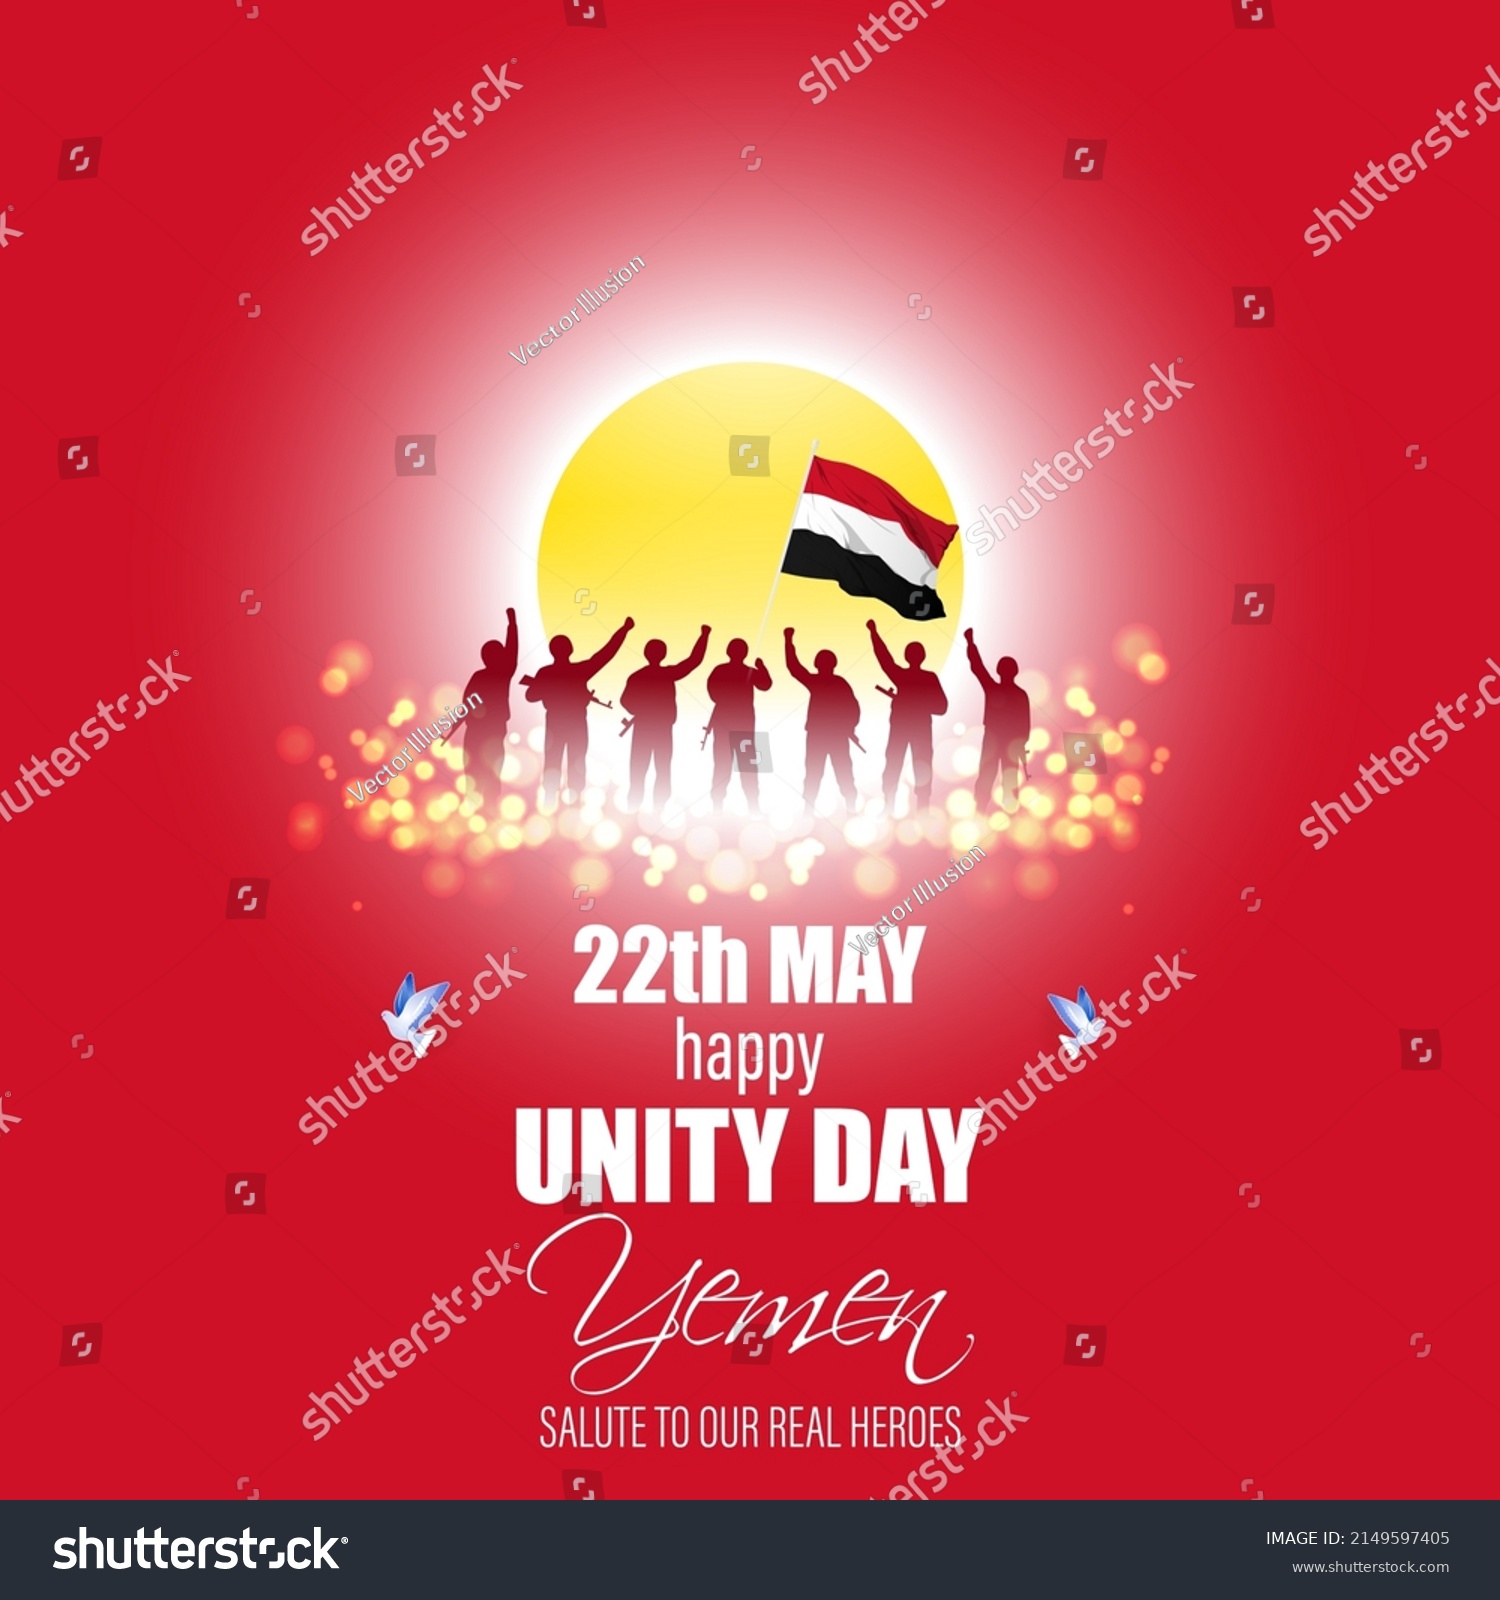 SVG of Vector illustration for Happy Unity Day Yemen. svg